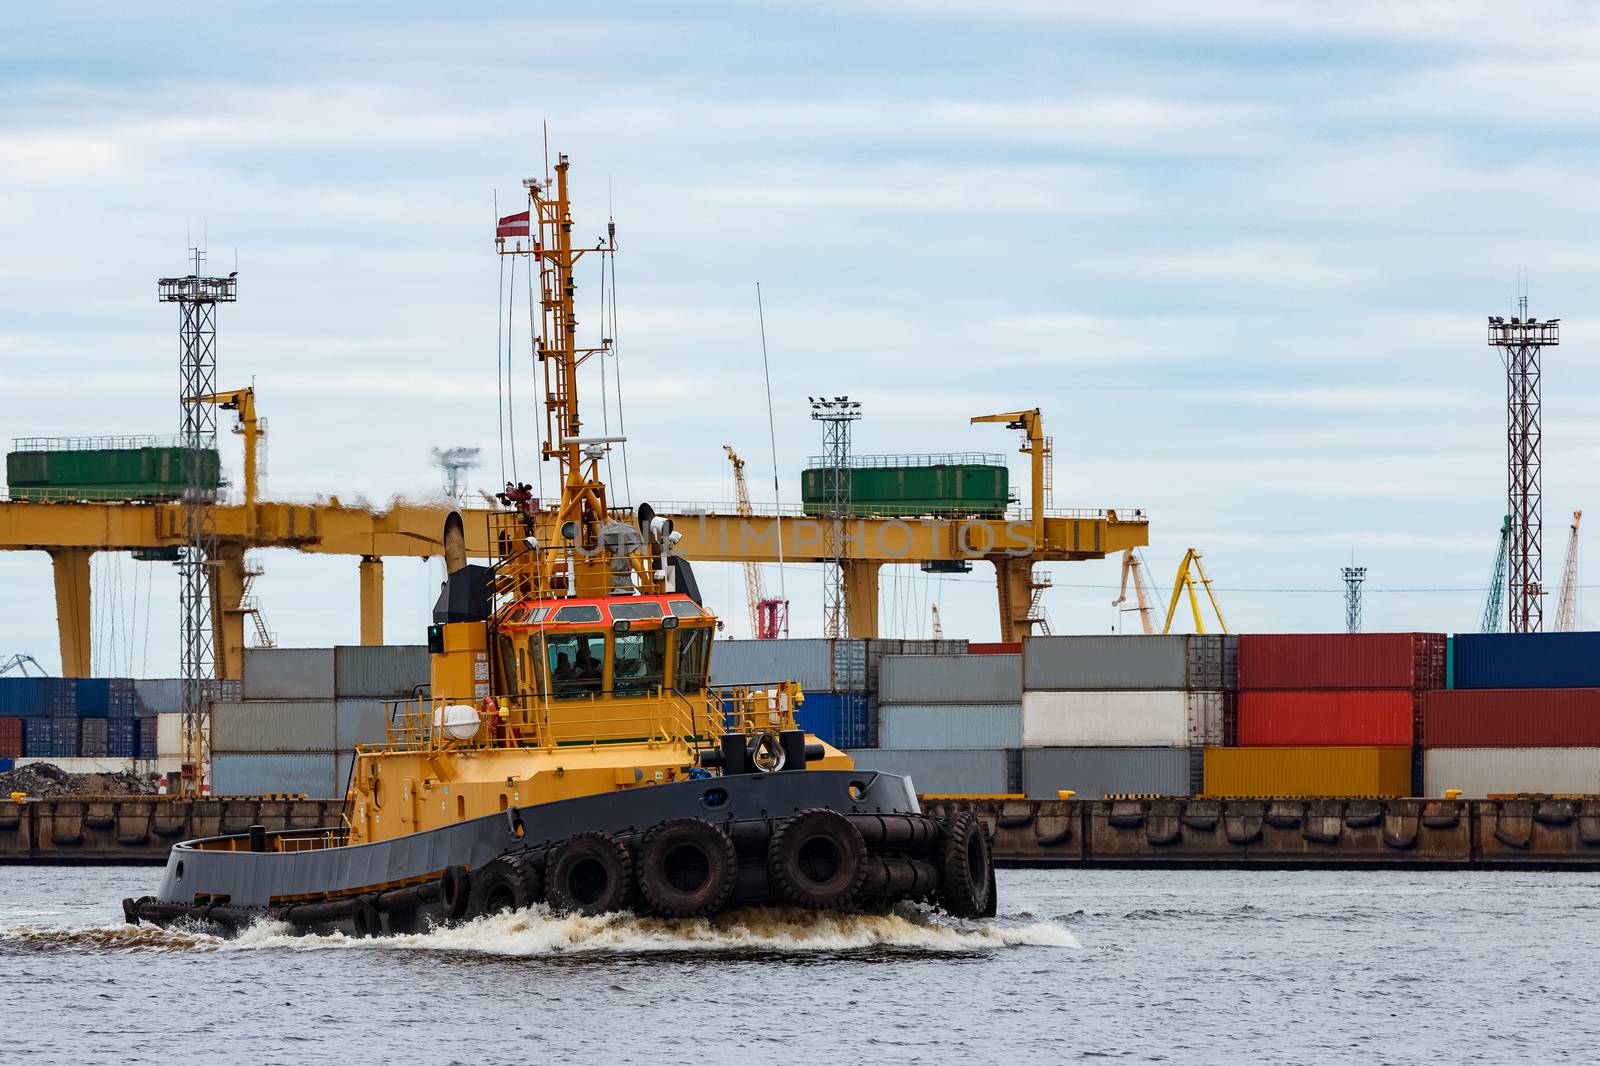 Tug ship in cargo port by sengnsp